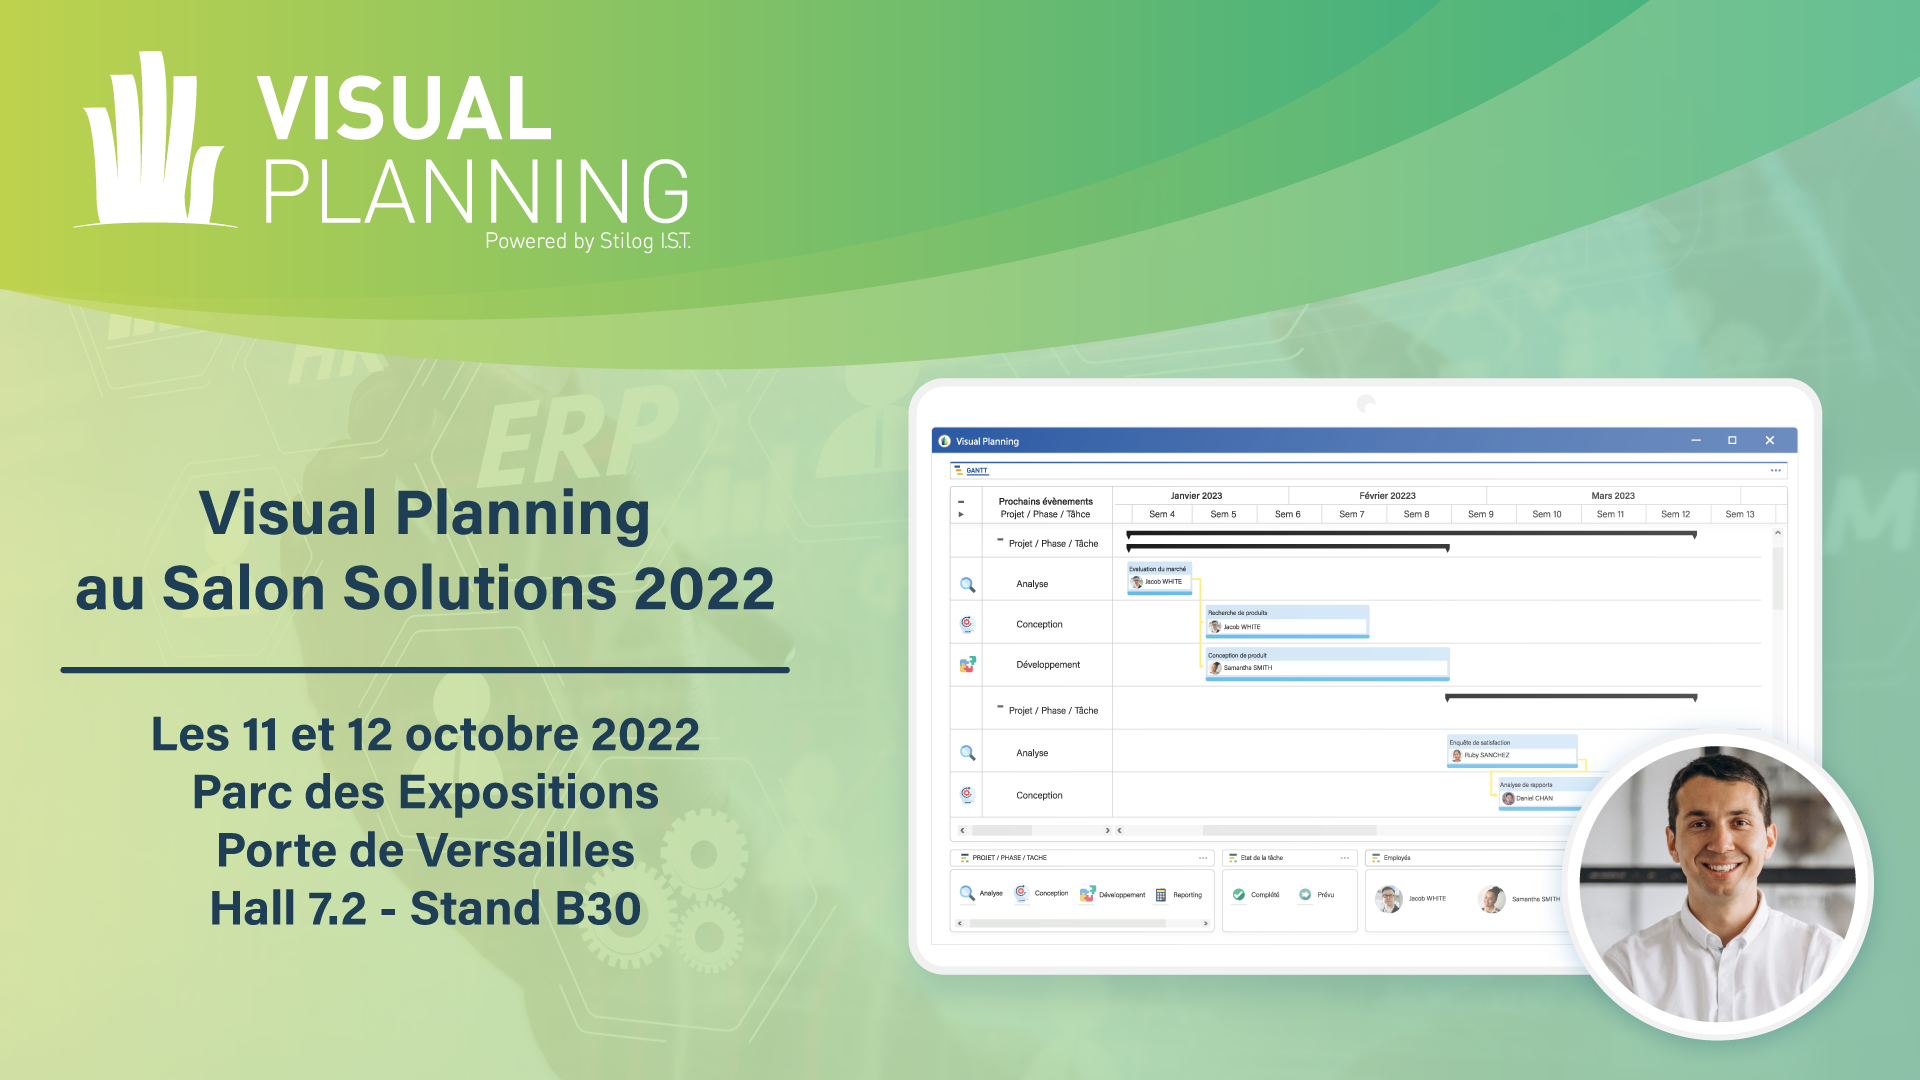 Stilog présente Visual Planning ausalon solutions 2022